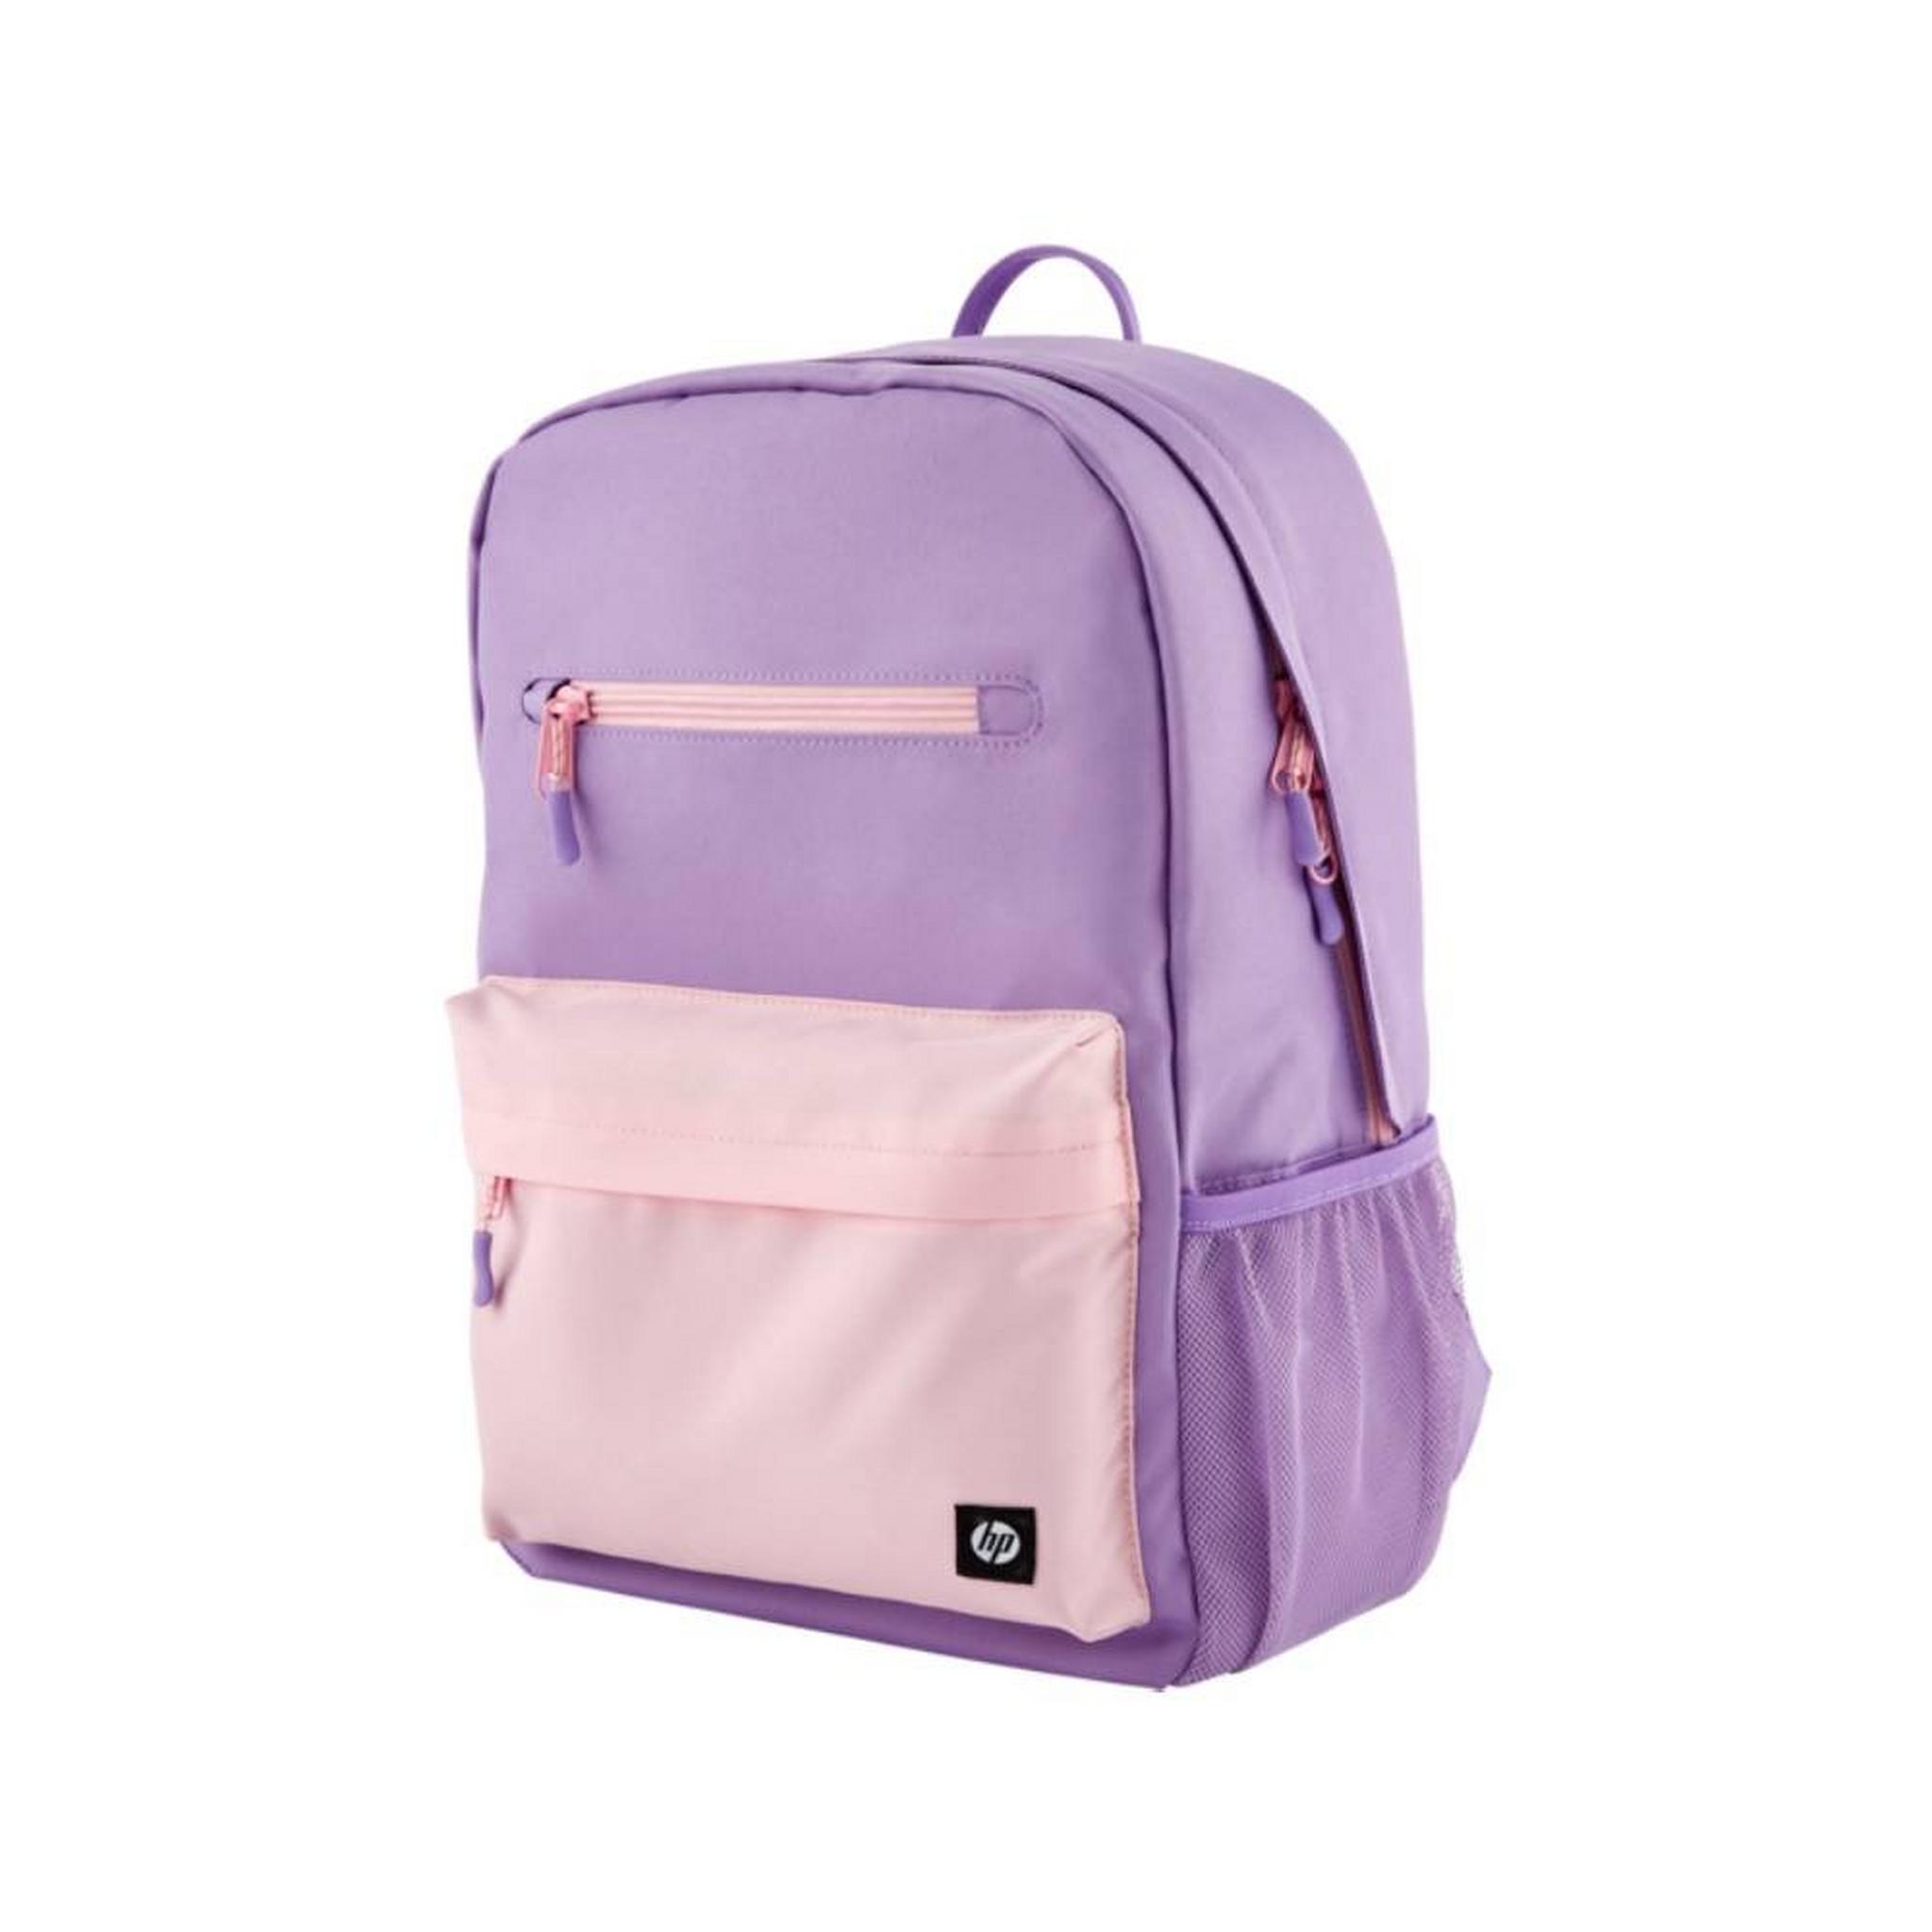 HP Campus Laptop Backpack, 7J597AA - Lavender